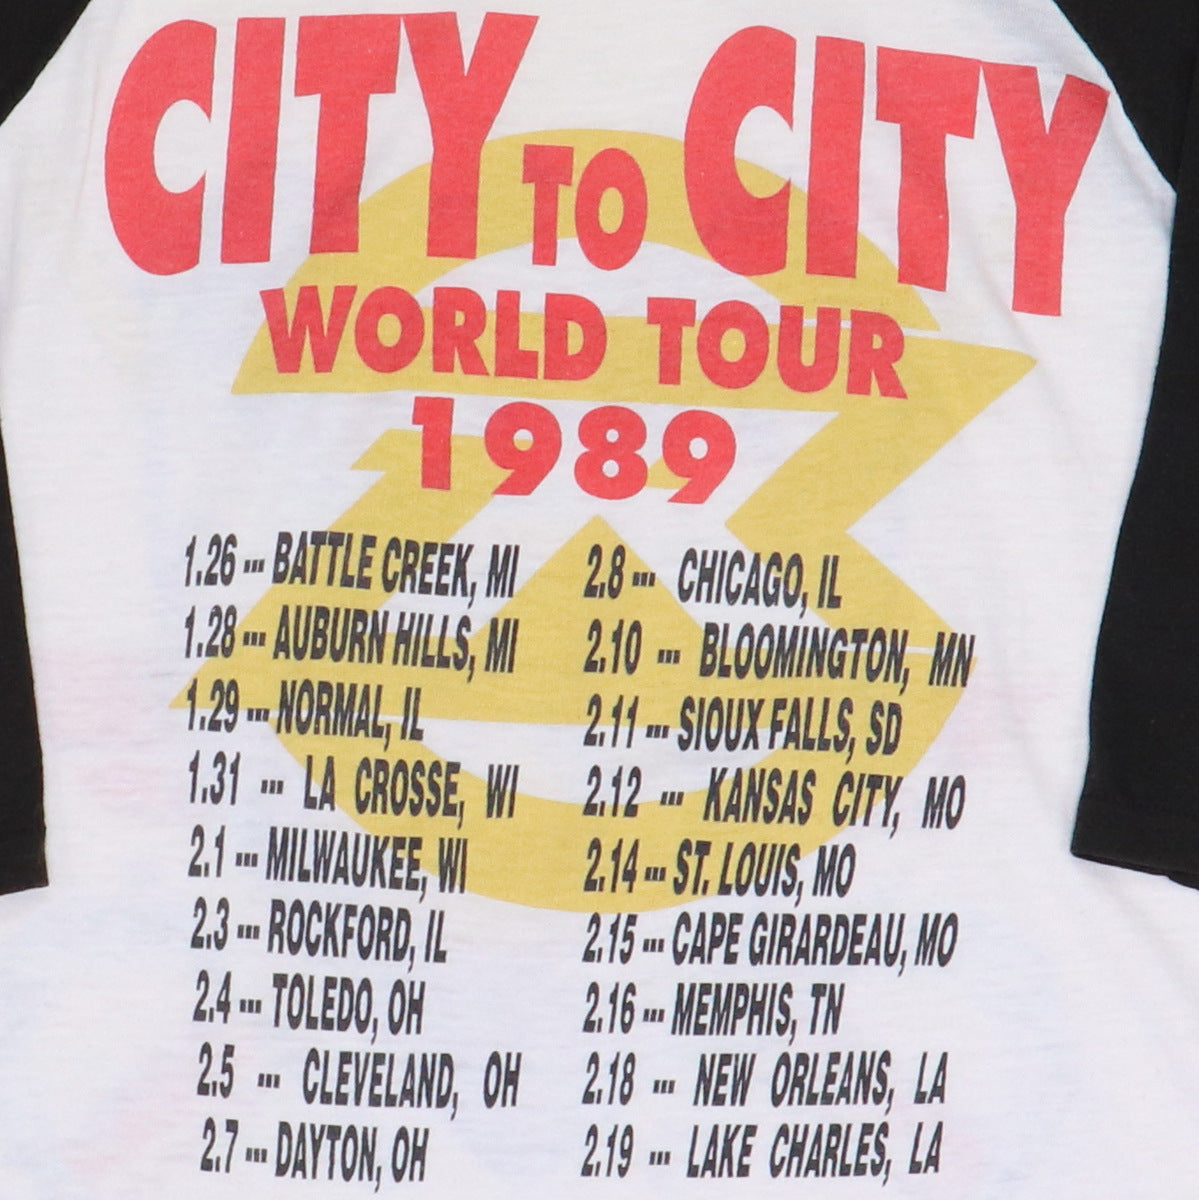 1989 Ratt Reach For The Sky City To City Tour Jersey Shirt